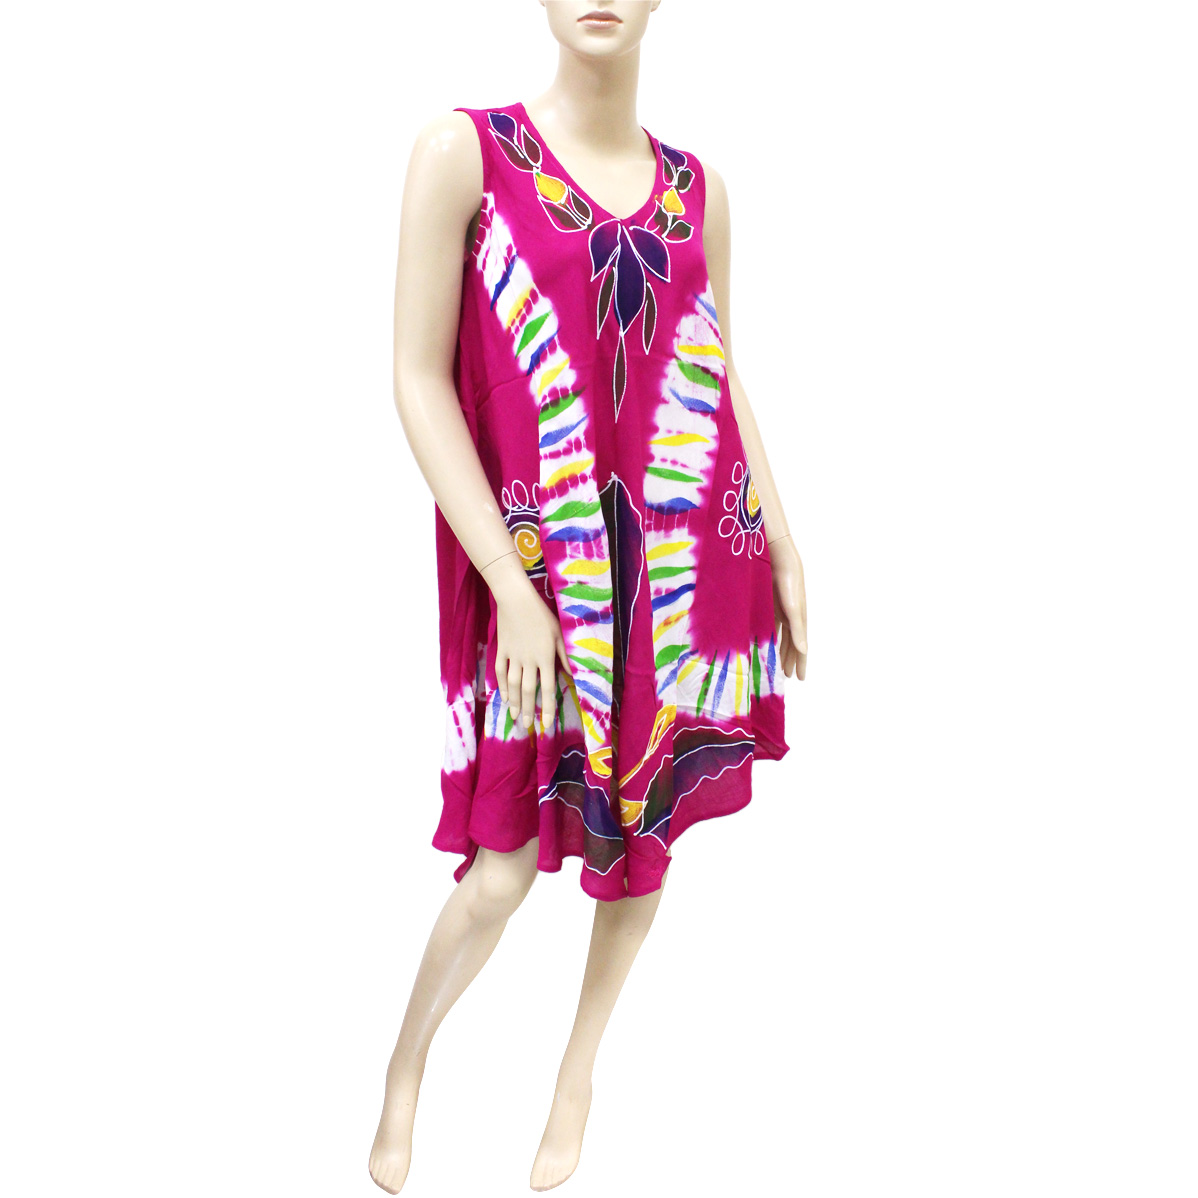 Embroidered Tie Dye Dress#Best Seller Set A [Set A] - $40.00 ...